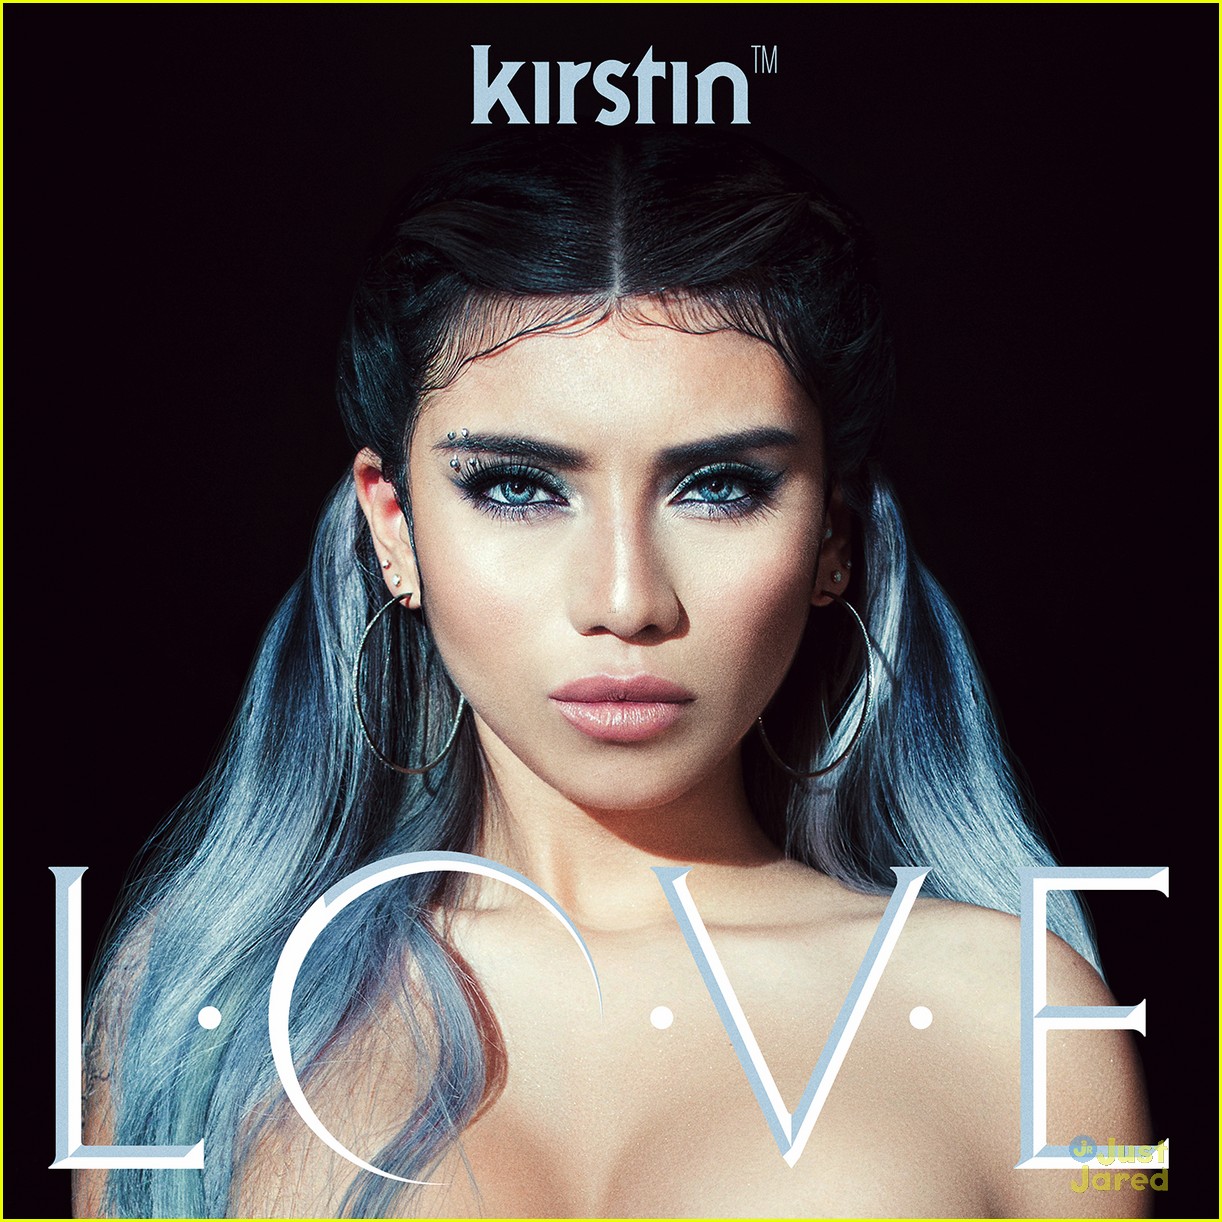 ptx kirstin new ep love video 02